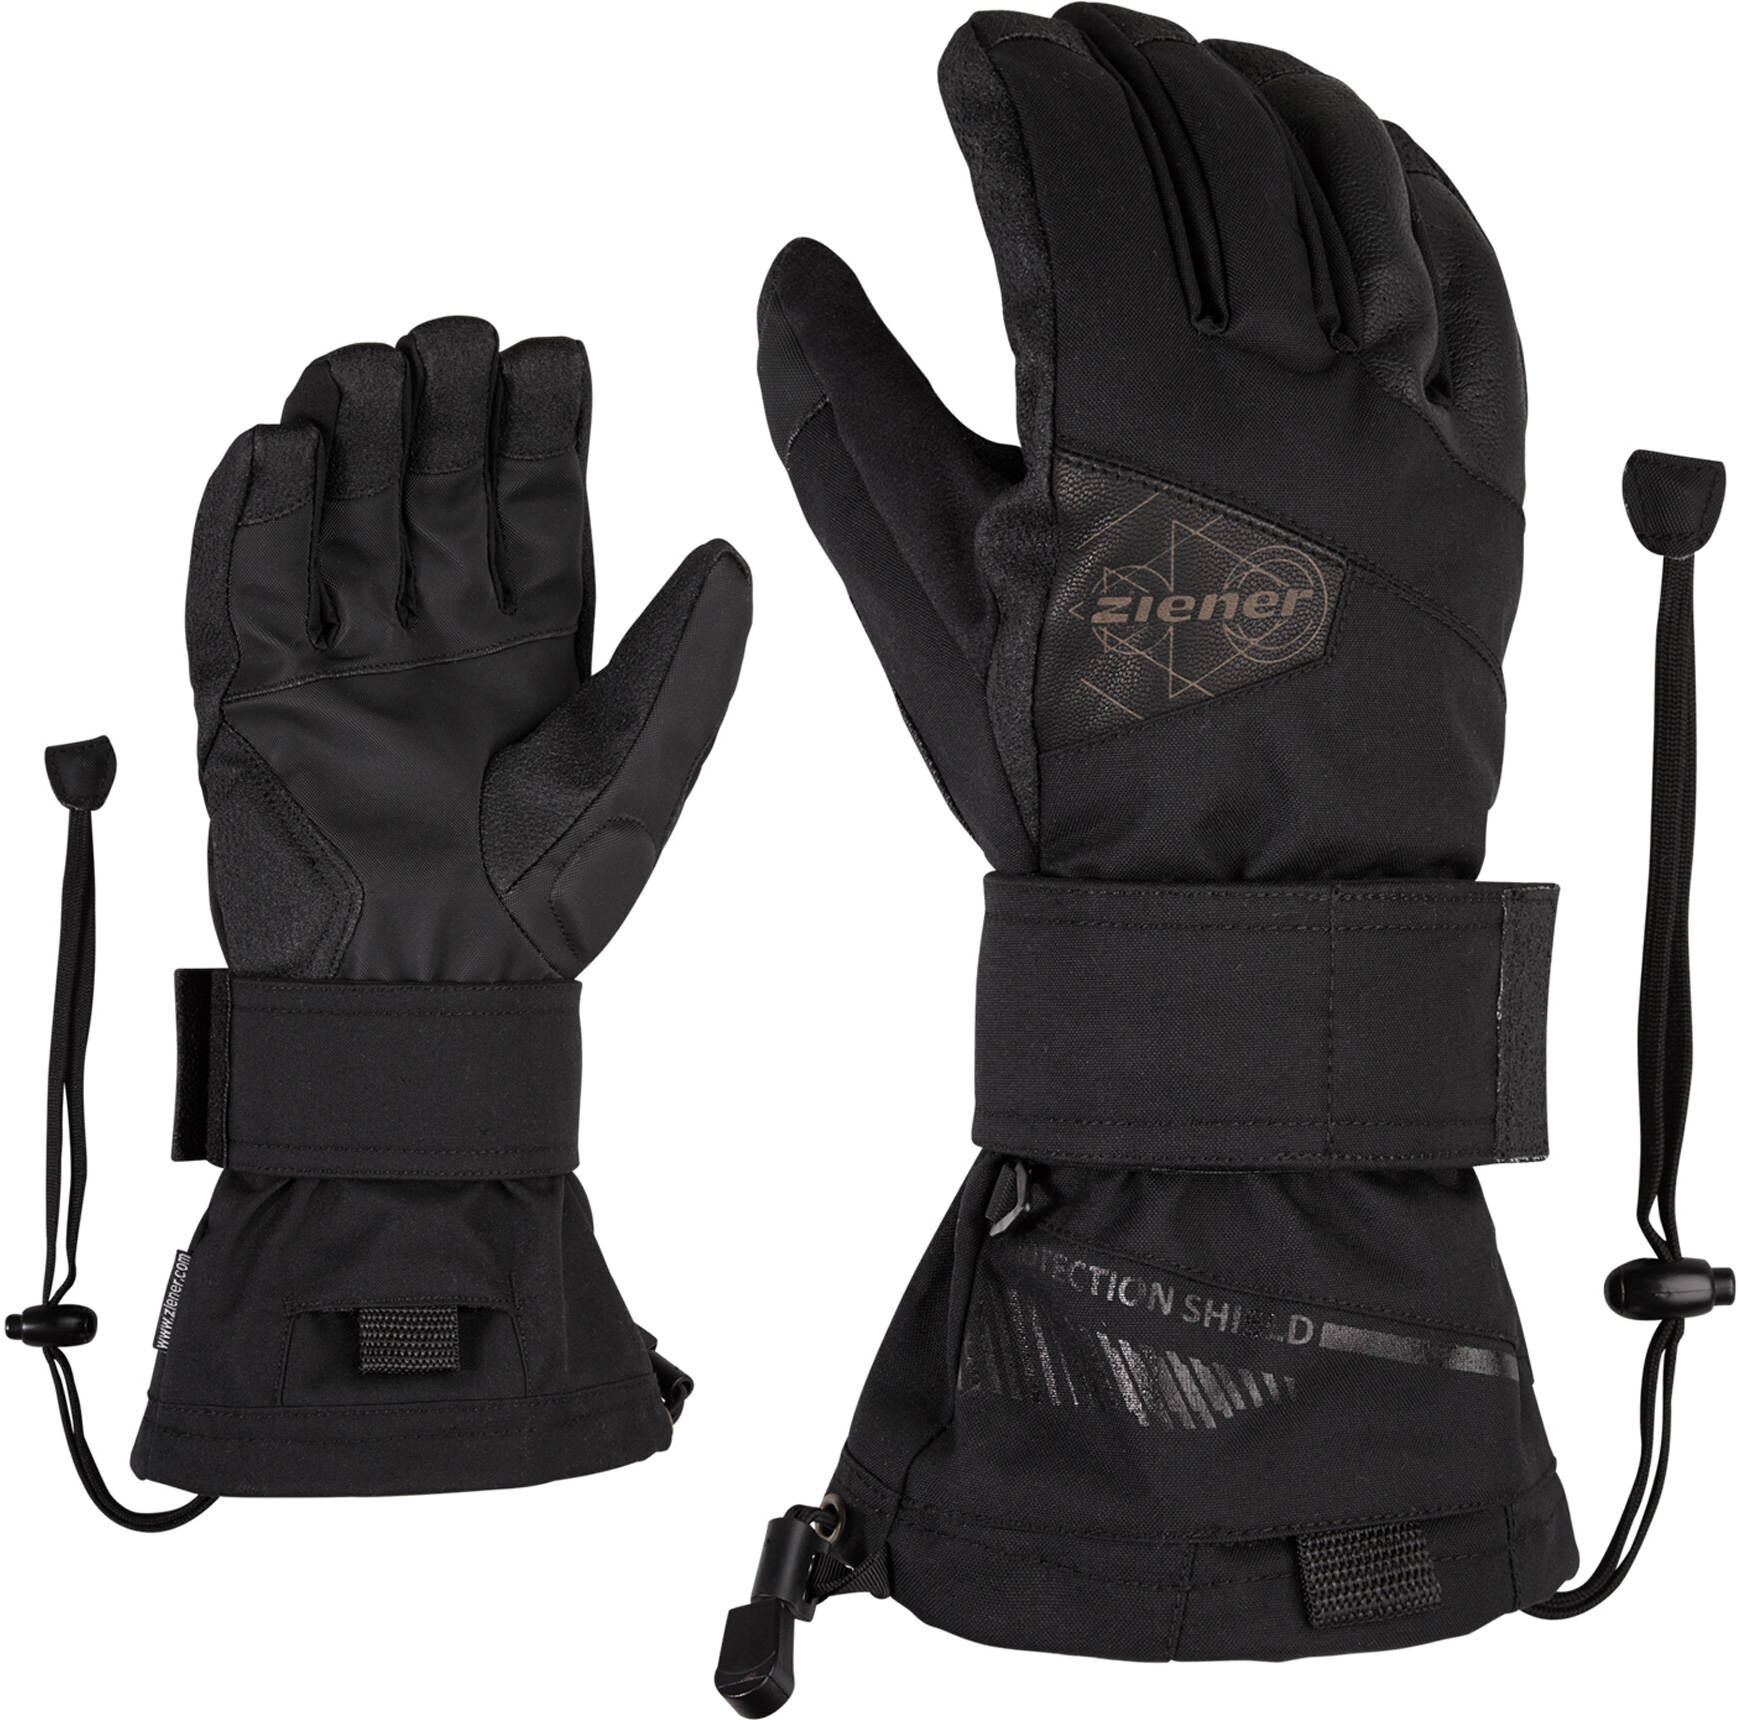 AS(R) MAXIMUS SB 12403 11 Intersport Wolf glove |